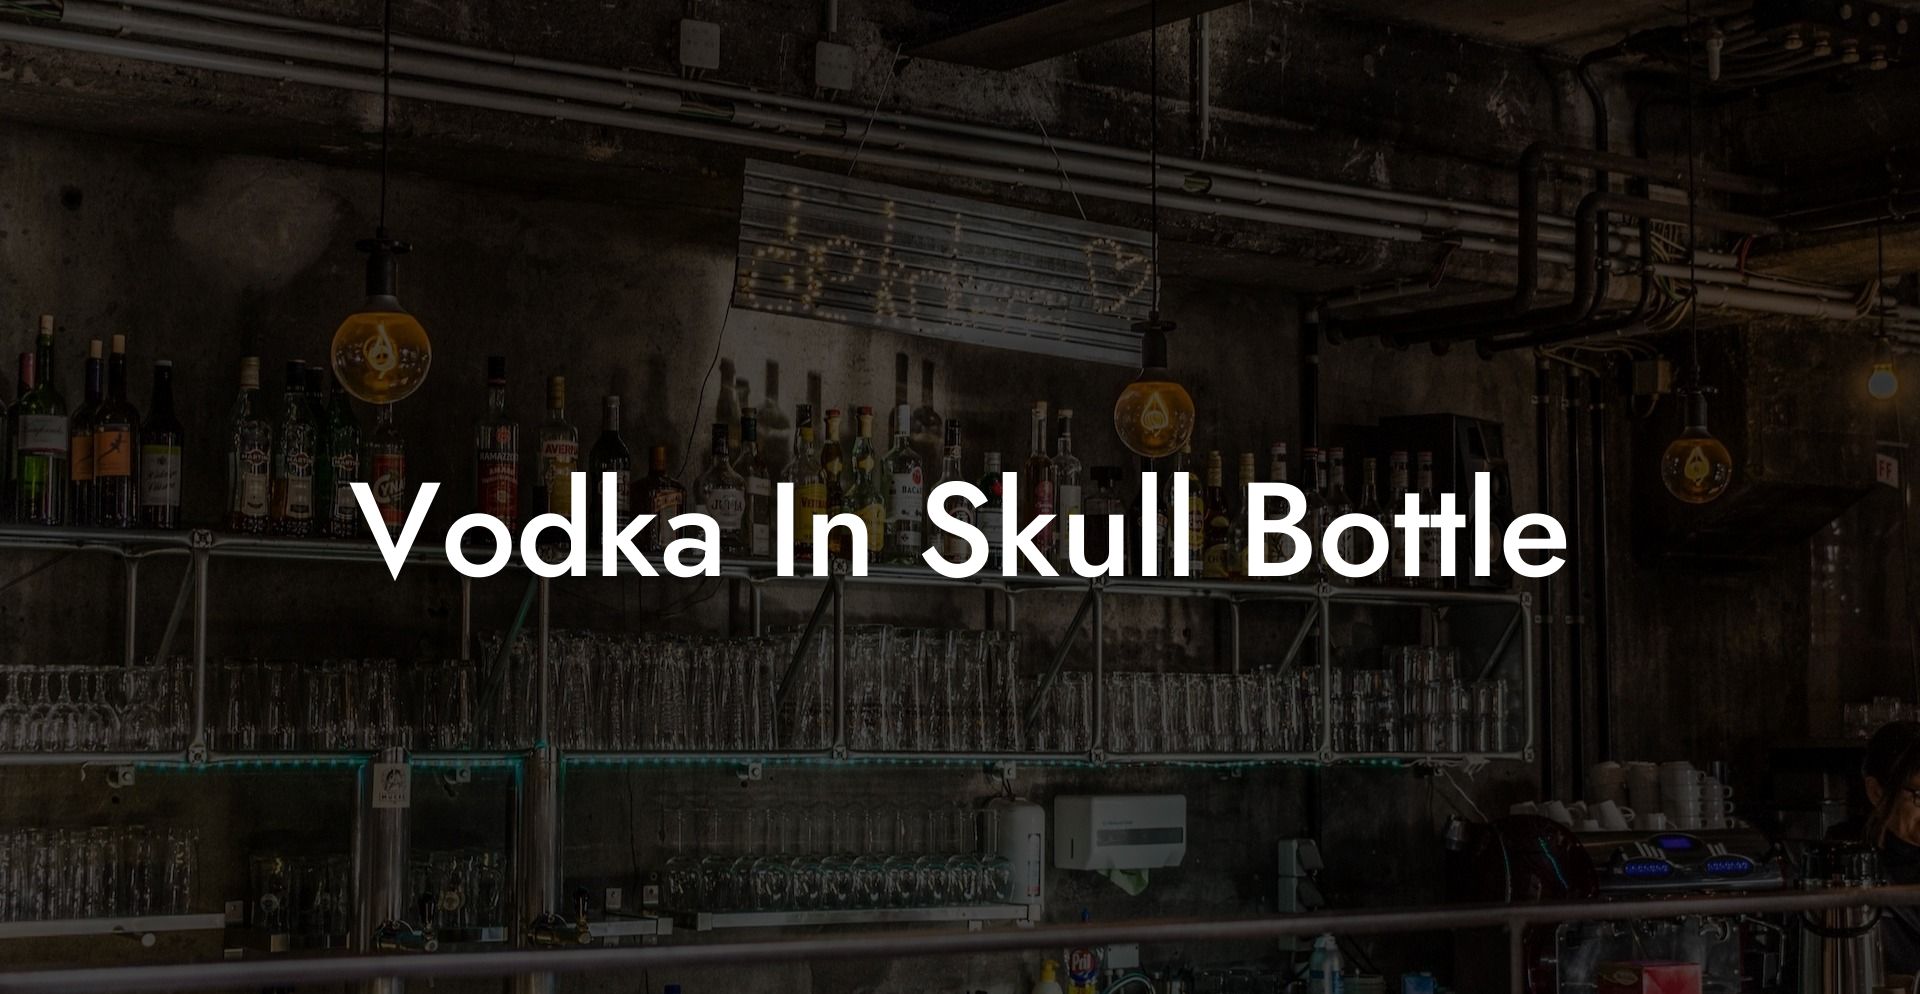 Vodka In Skull Bottle